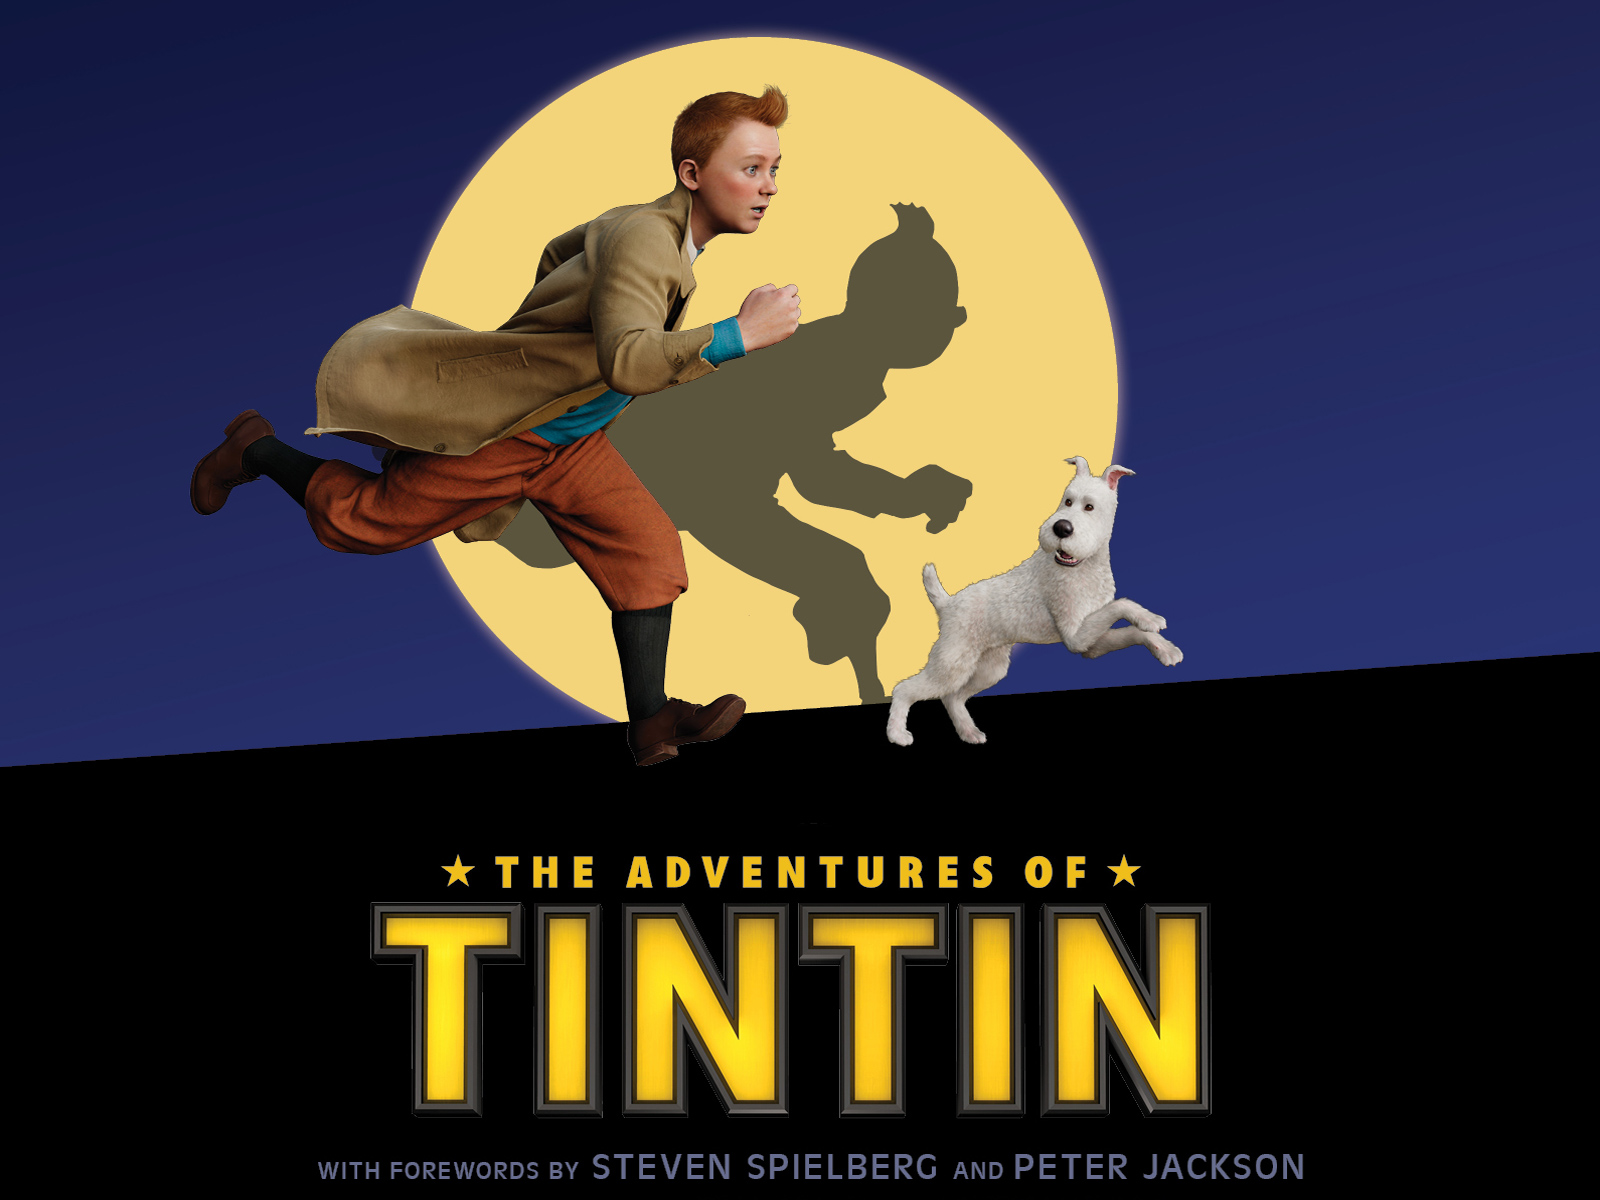 The Adventures Of Tintin Secret Of The Unicorn-Free-Download-1-OceanofGames4u.com